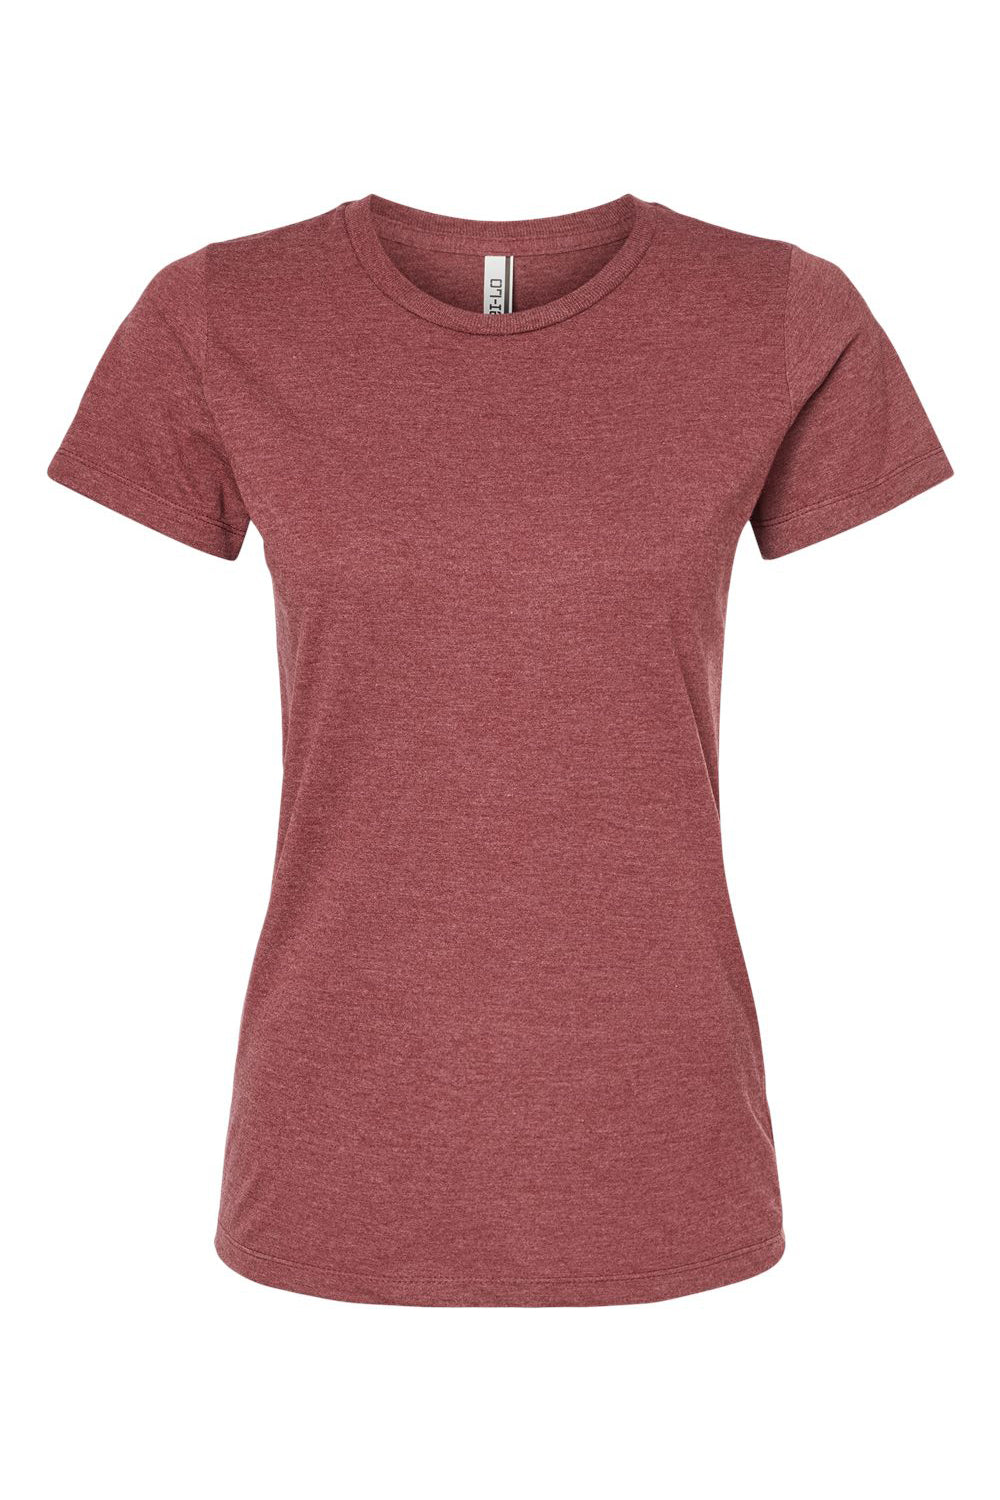 Tultex 542 Womens Premium Short Sleeve Crewneck T-Shirt Heather Burgundy Flat Front